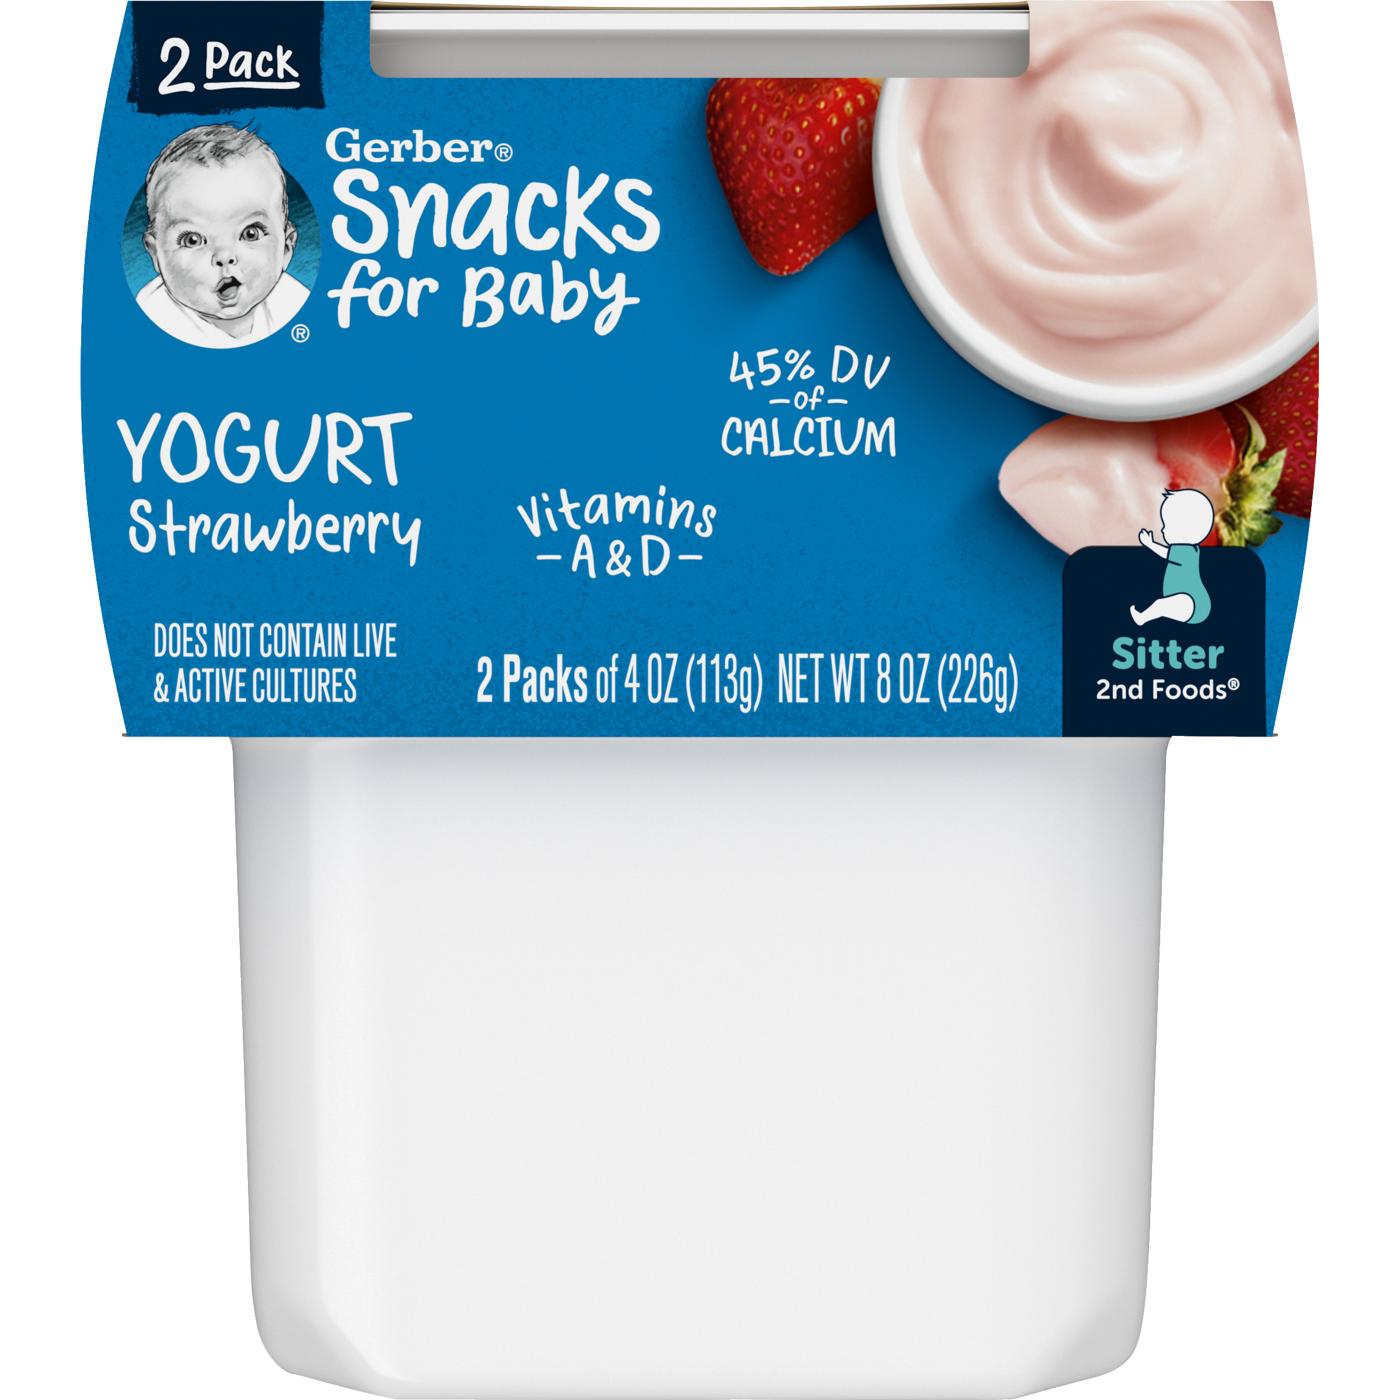 Gerber Snacks for Baby 2nd Foods - Strawberry Yogurt; image 1 of 3